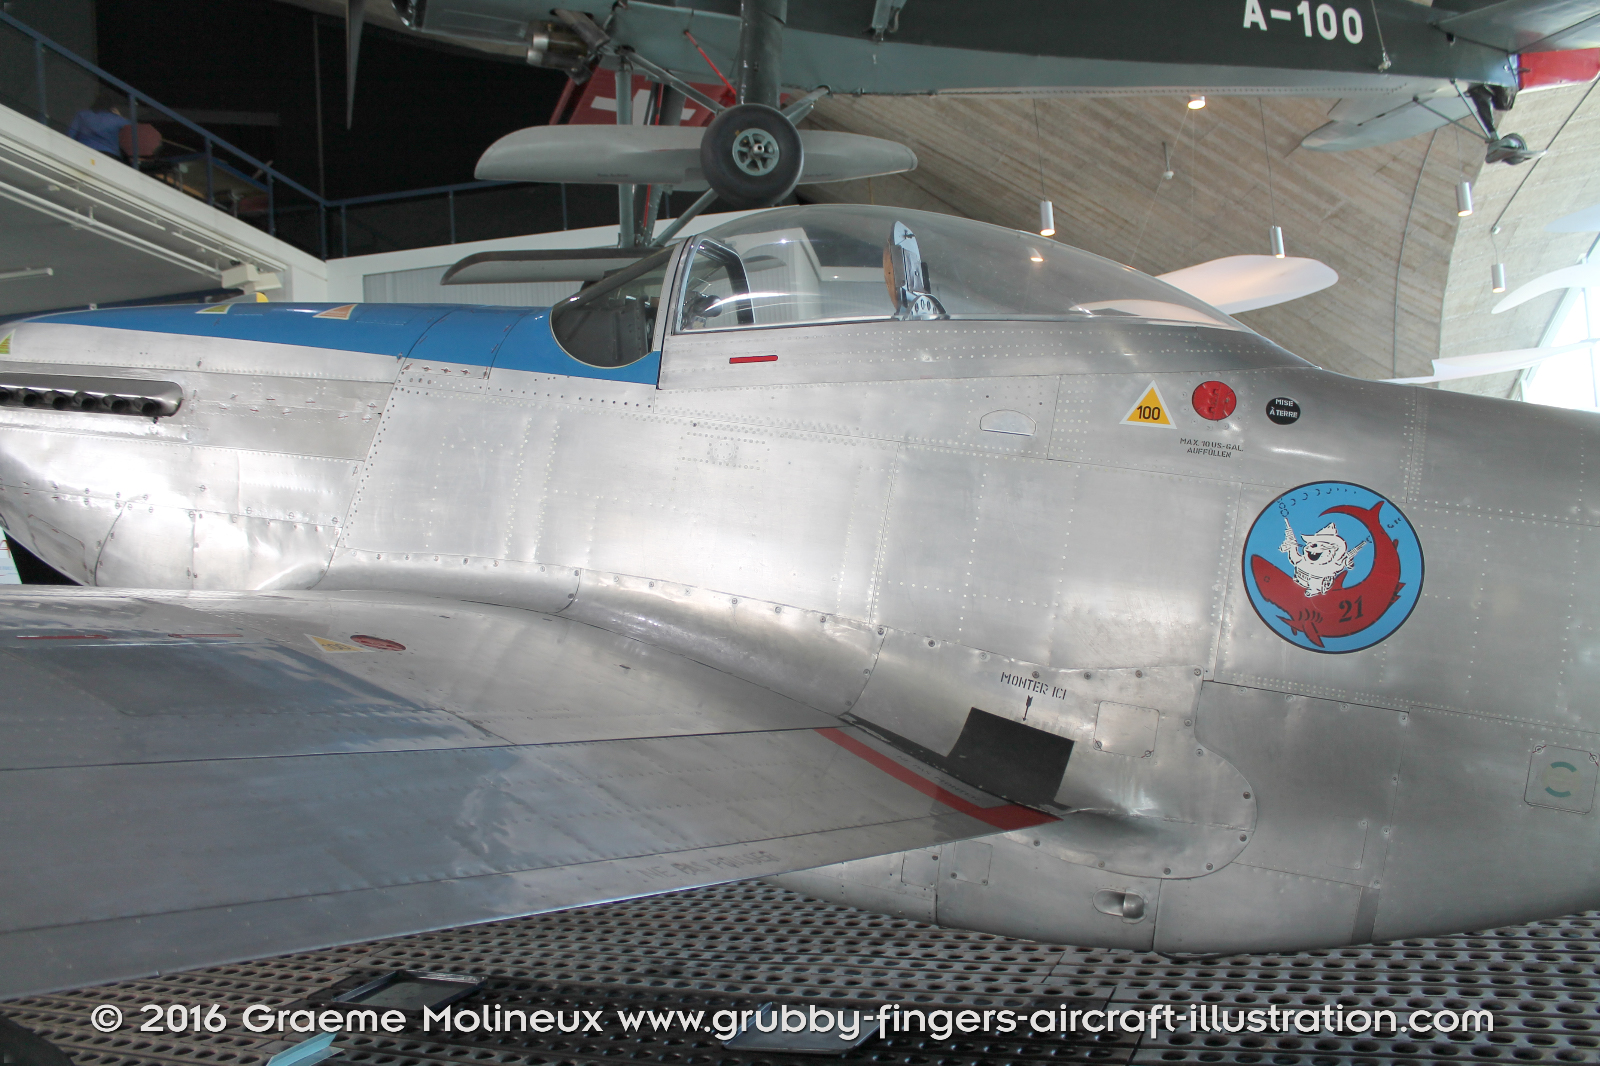 NORTH_AMERICAN_P-51D_Mustang_Walkaround_J-2113_Swiss_Air_Force_Museum_2015_17_GrubbyFingers